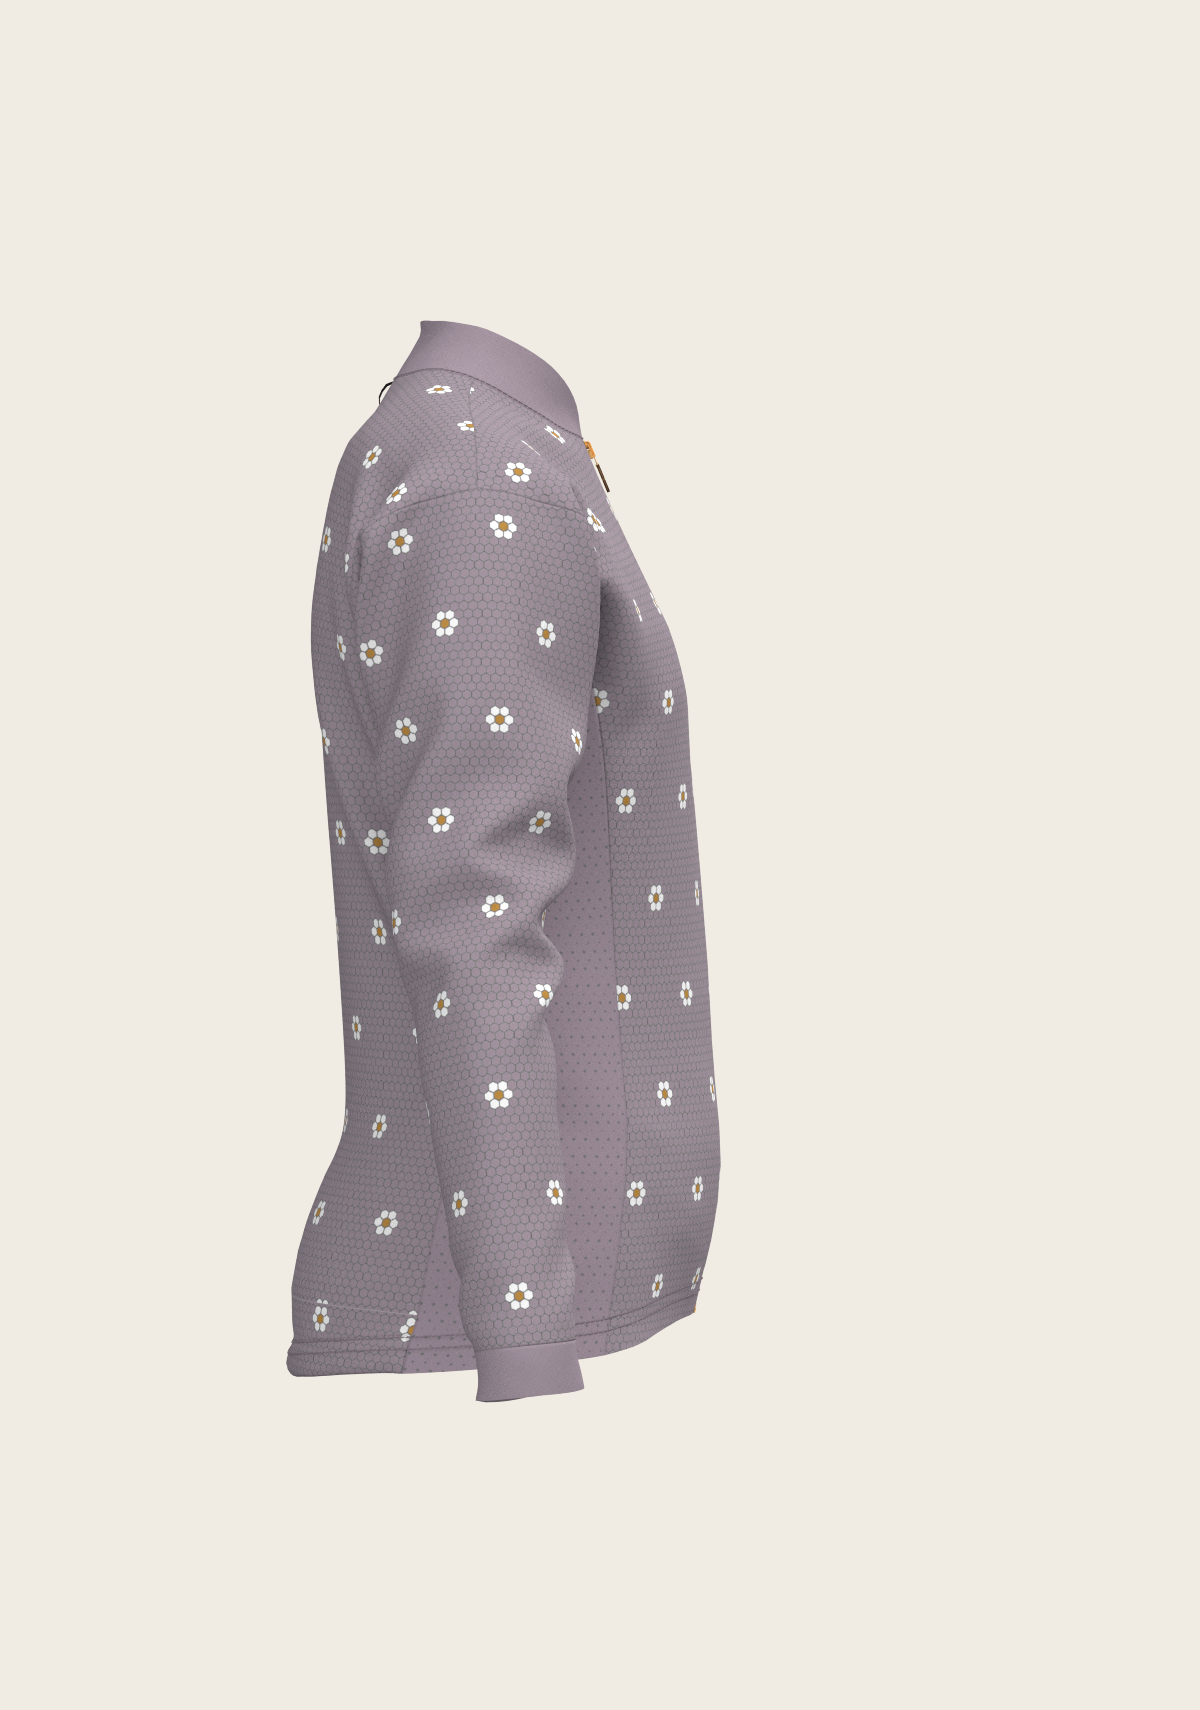 Mosaic Daises in Lavender Children's Long Sleeve Shirt